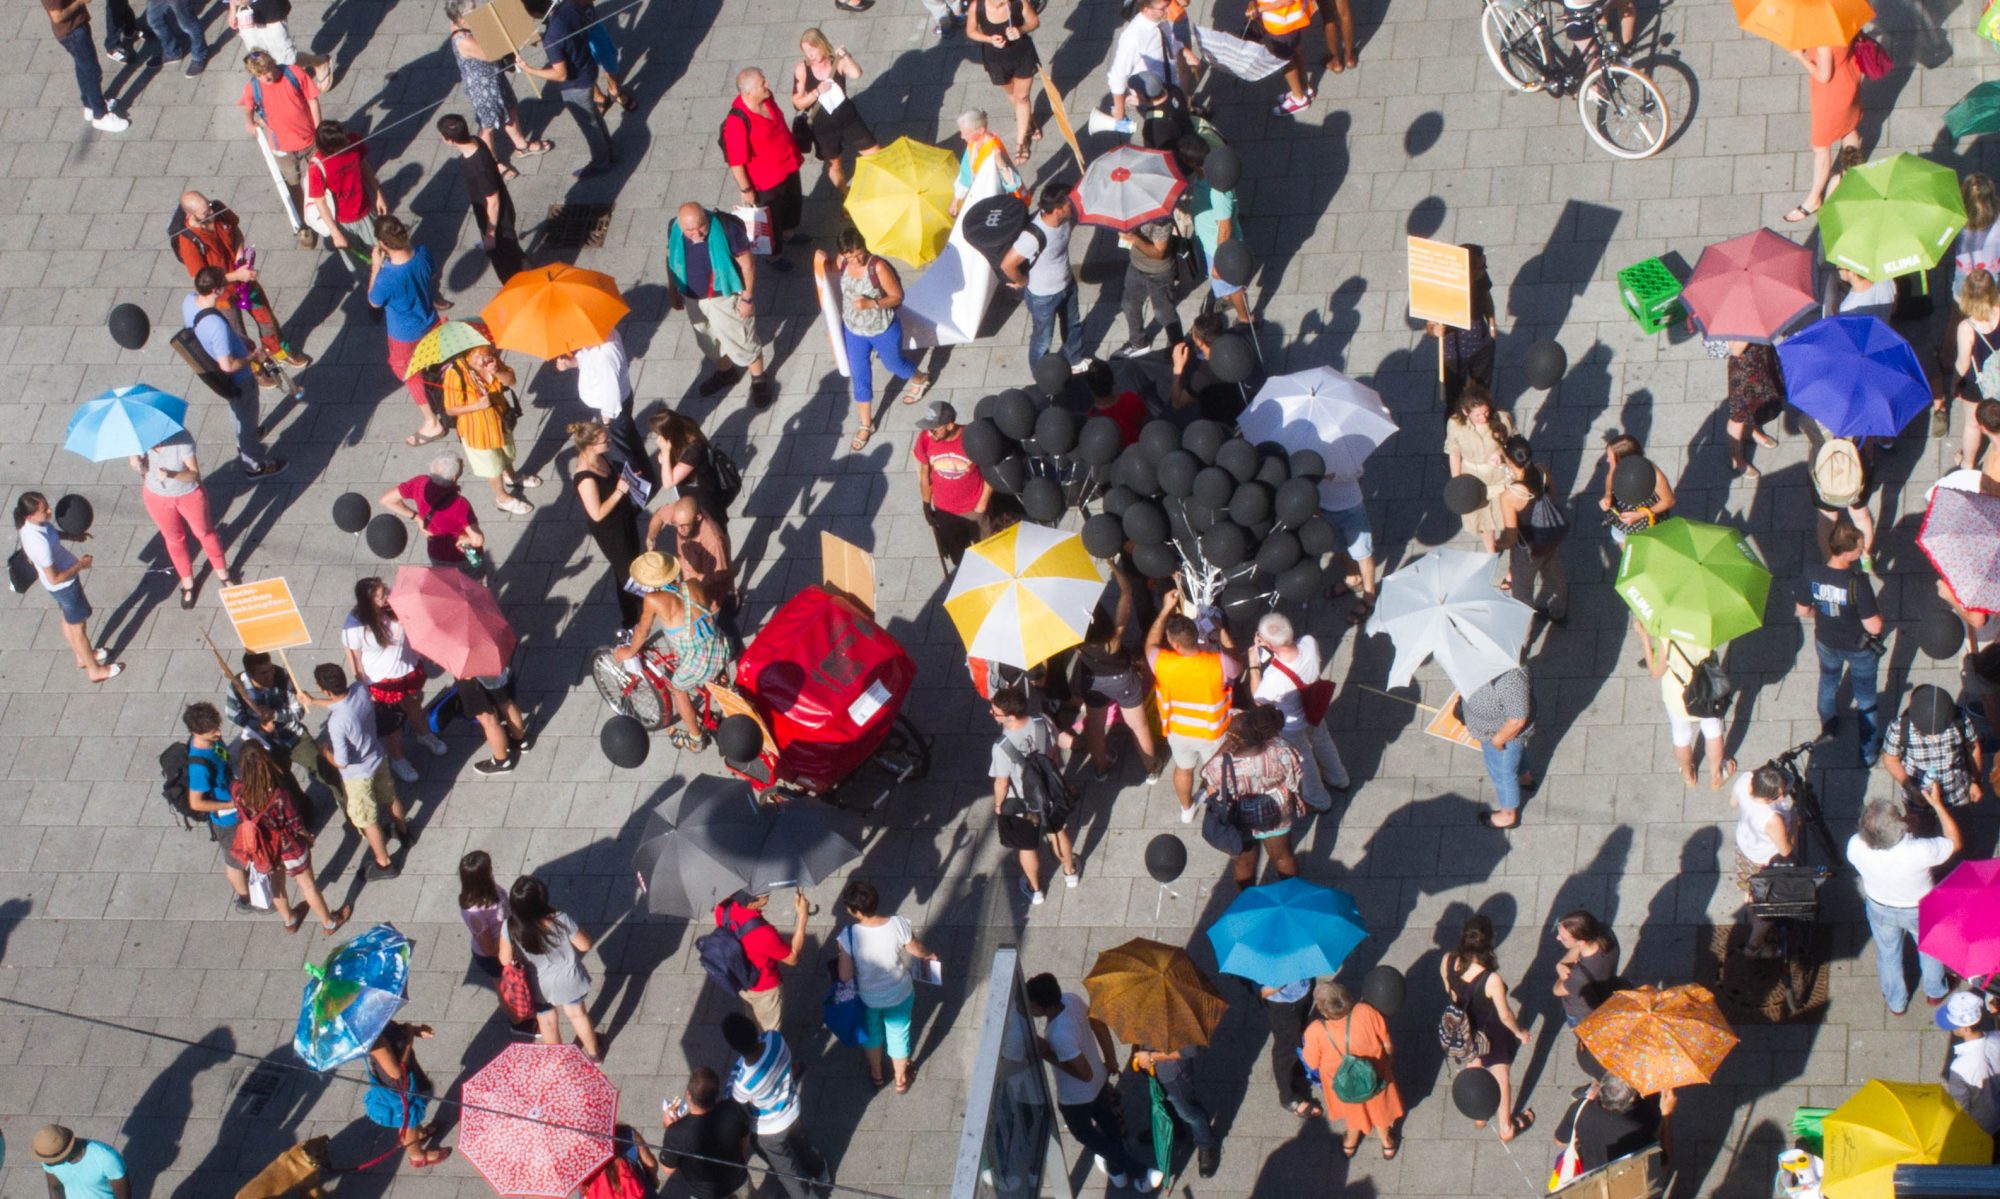 Umbrella March Linz - Plattform Solidarität